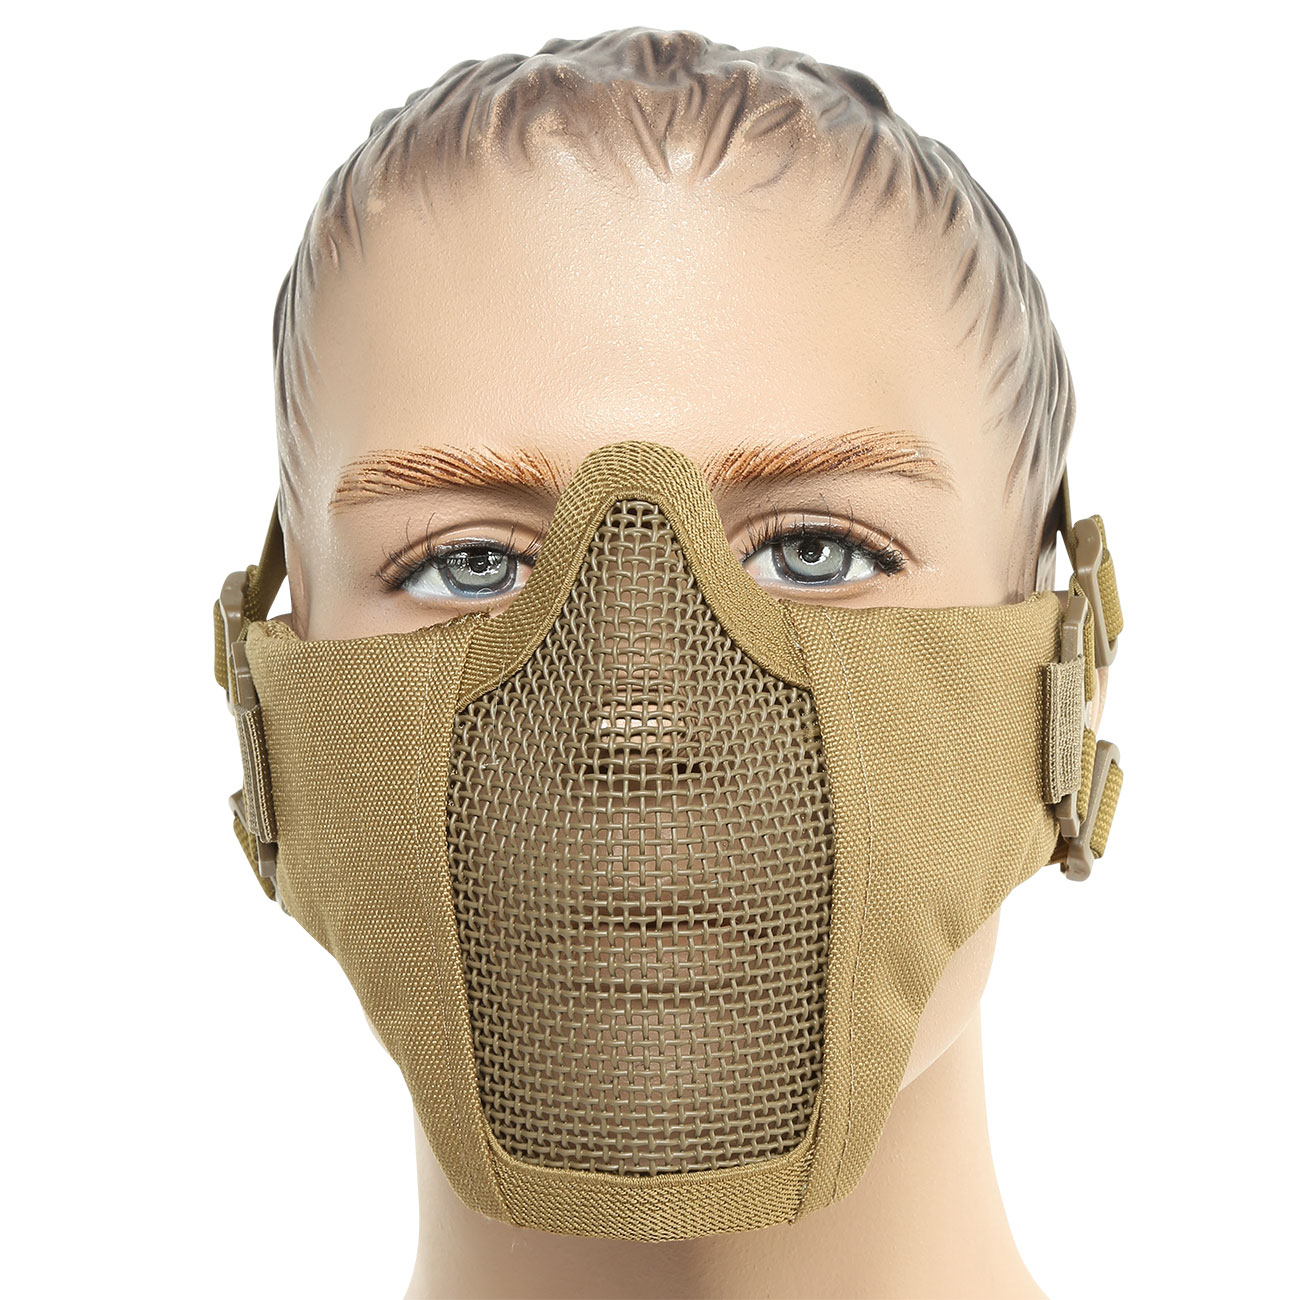 ASG Strike Systems Mesh Mask Airsoft Gittermaske Lower Face tan Bild 1